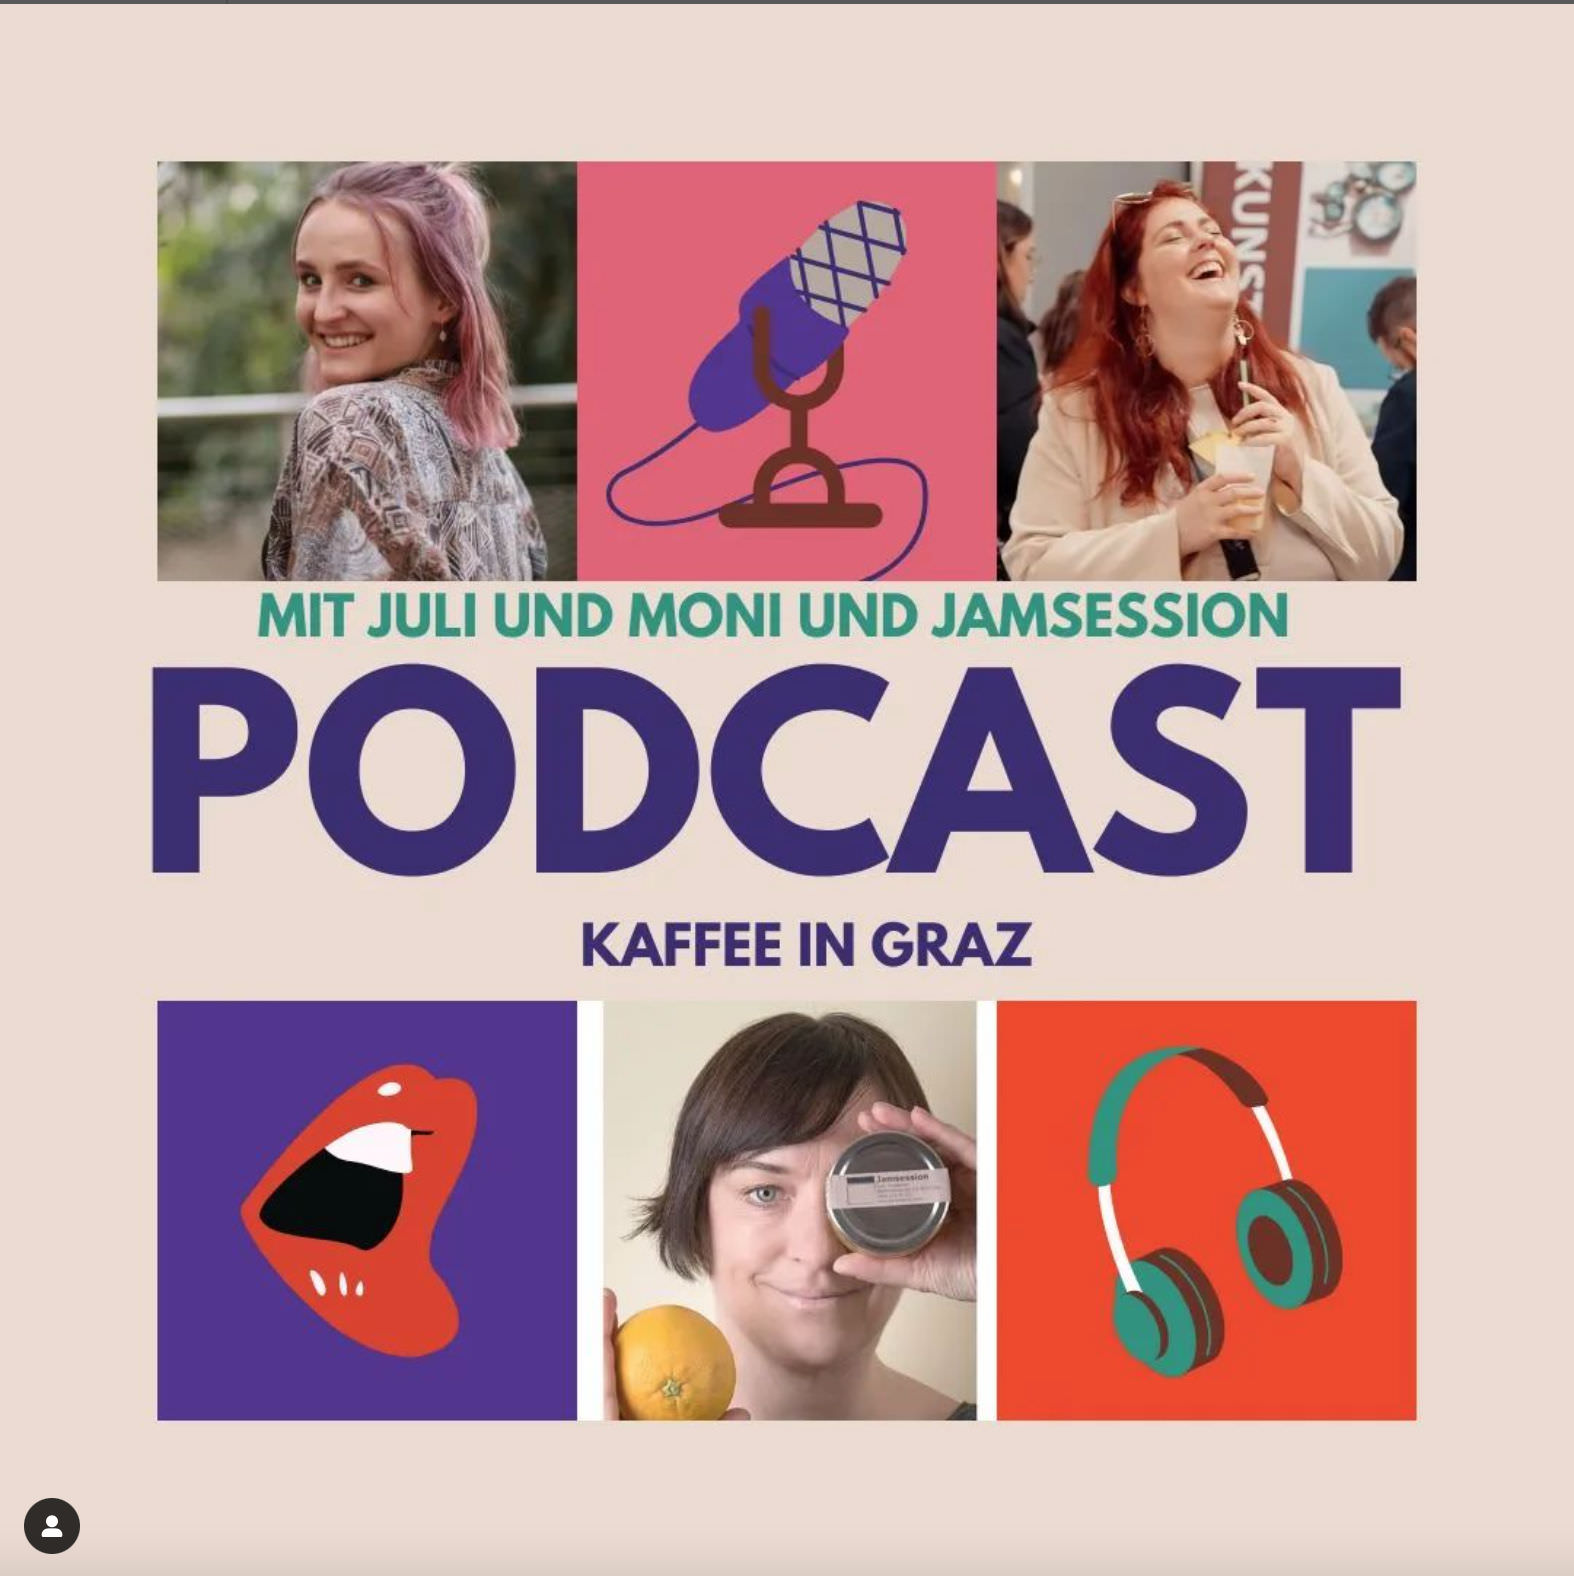 Podcast_Jamsession